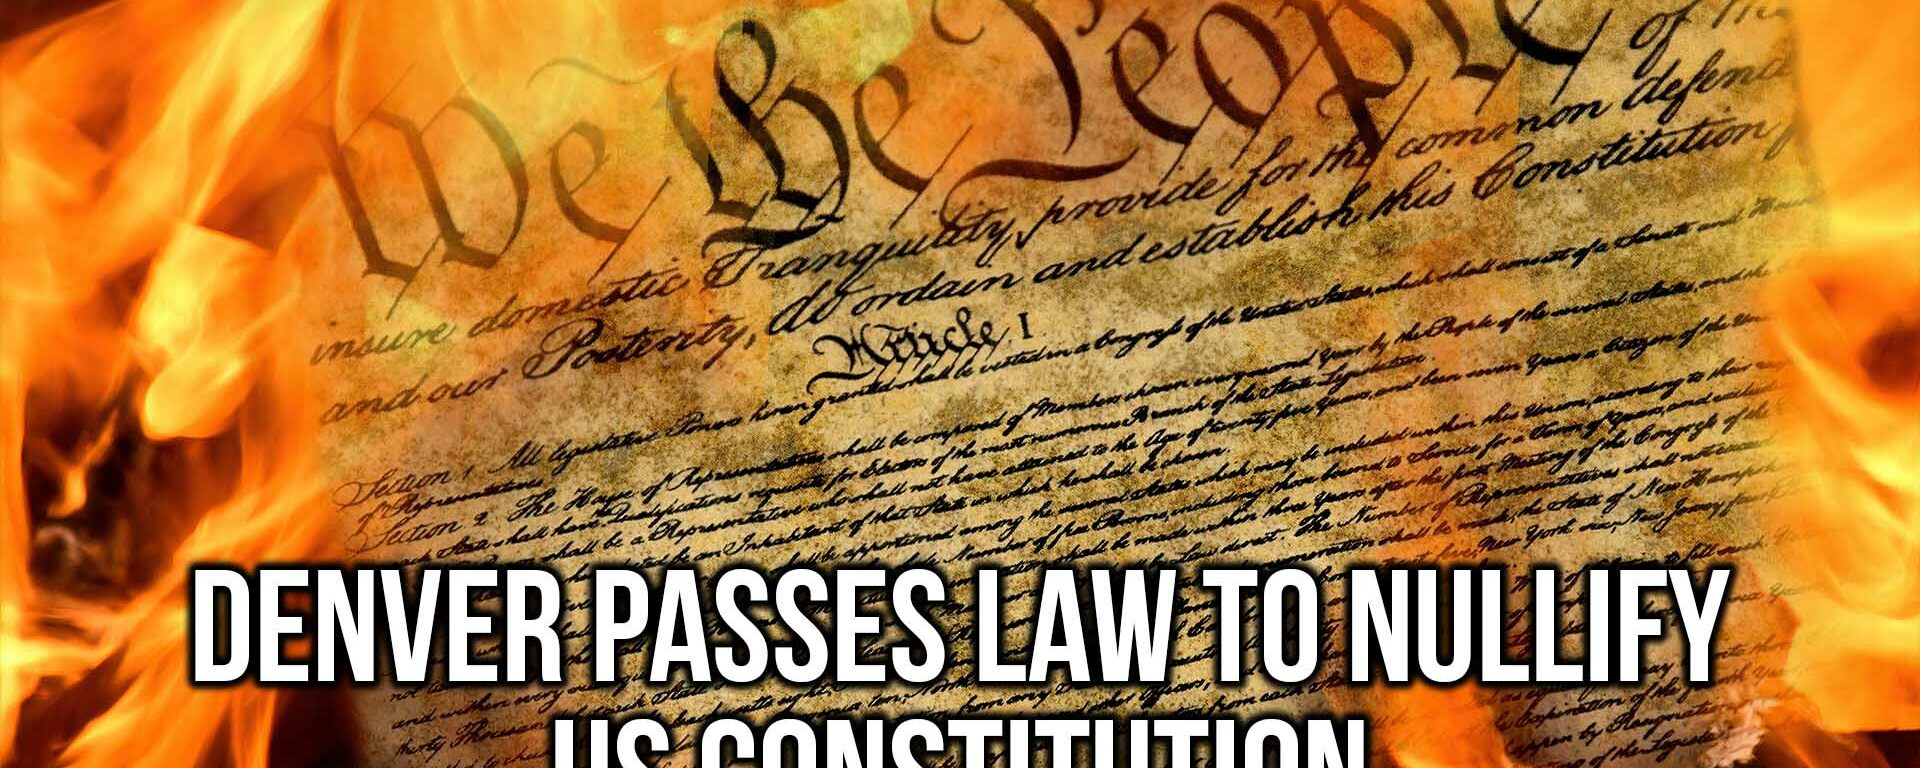 Denver Passes Law to Nullify US Constitution | SOTG 1120 Pt. 3